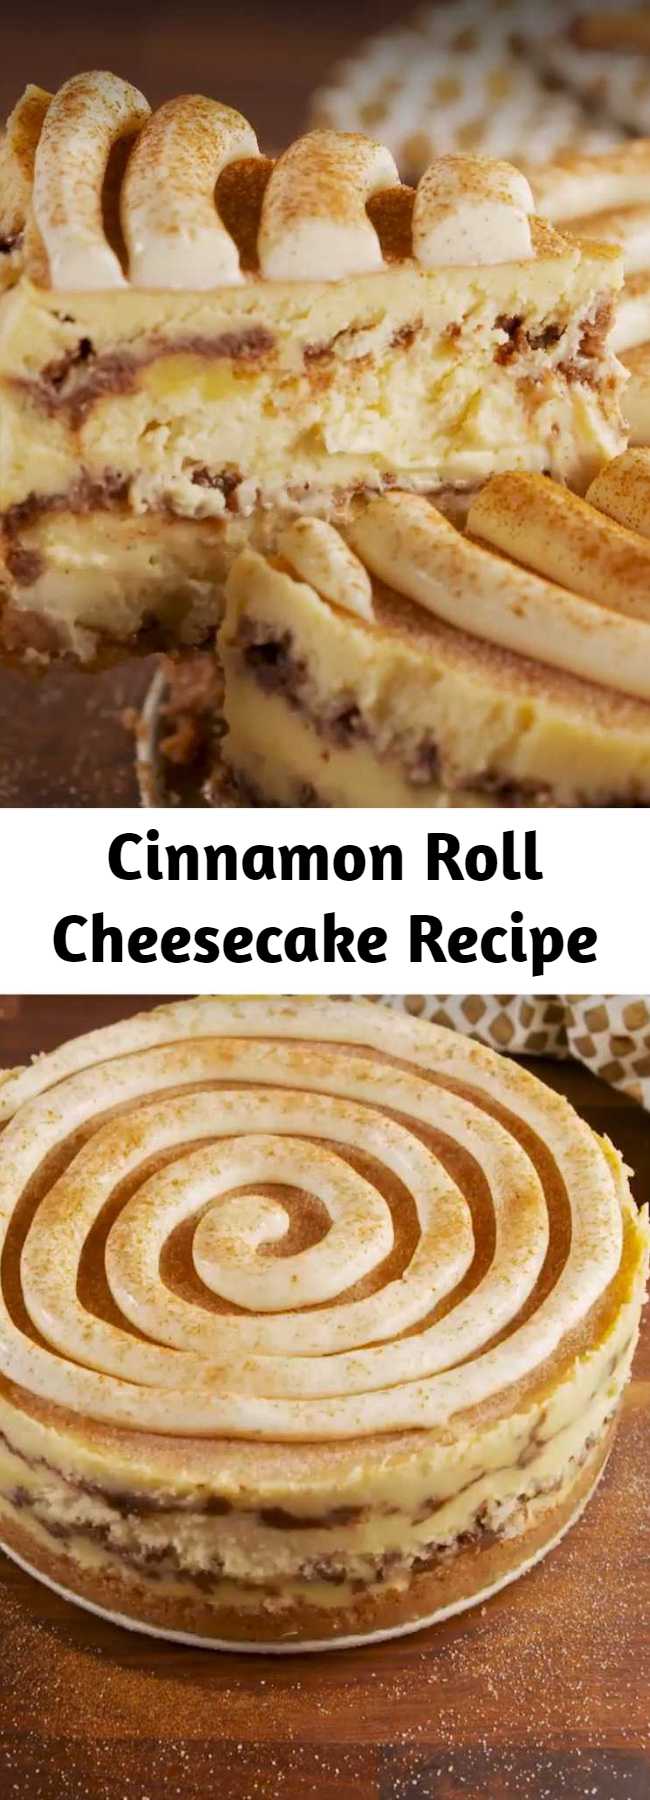 Cinnamon Roll Cheesecake Recipe - The inside of this cheesecake though. #easyrecipe #dessert #cheesecake #baking